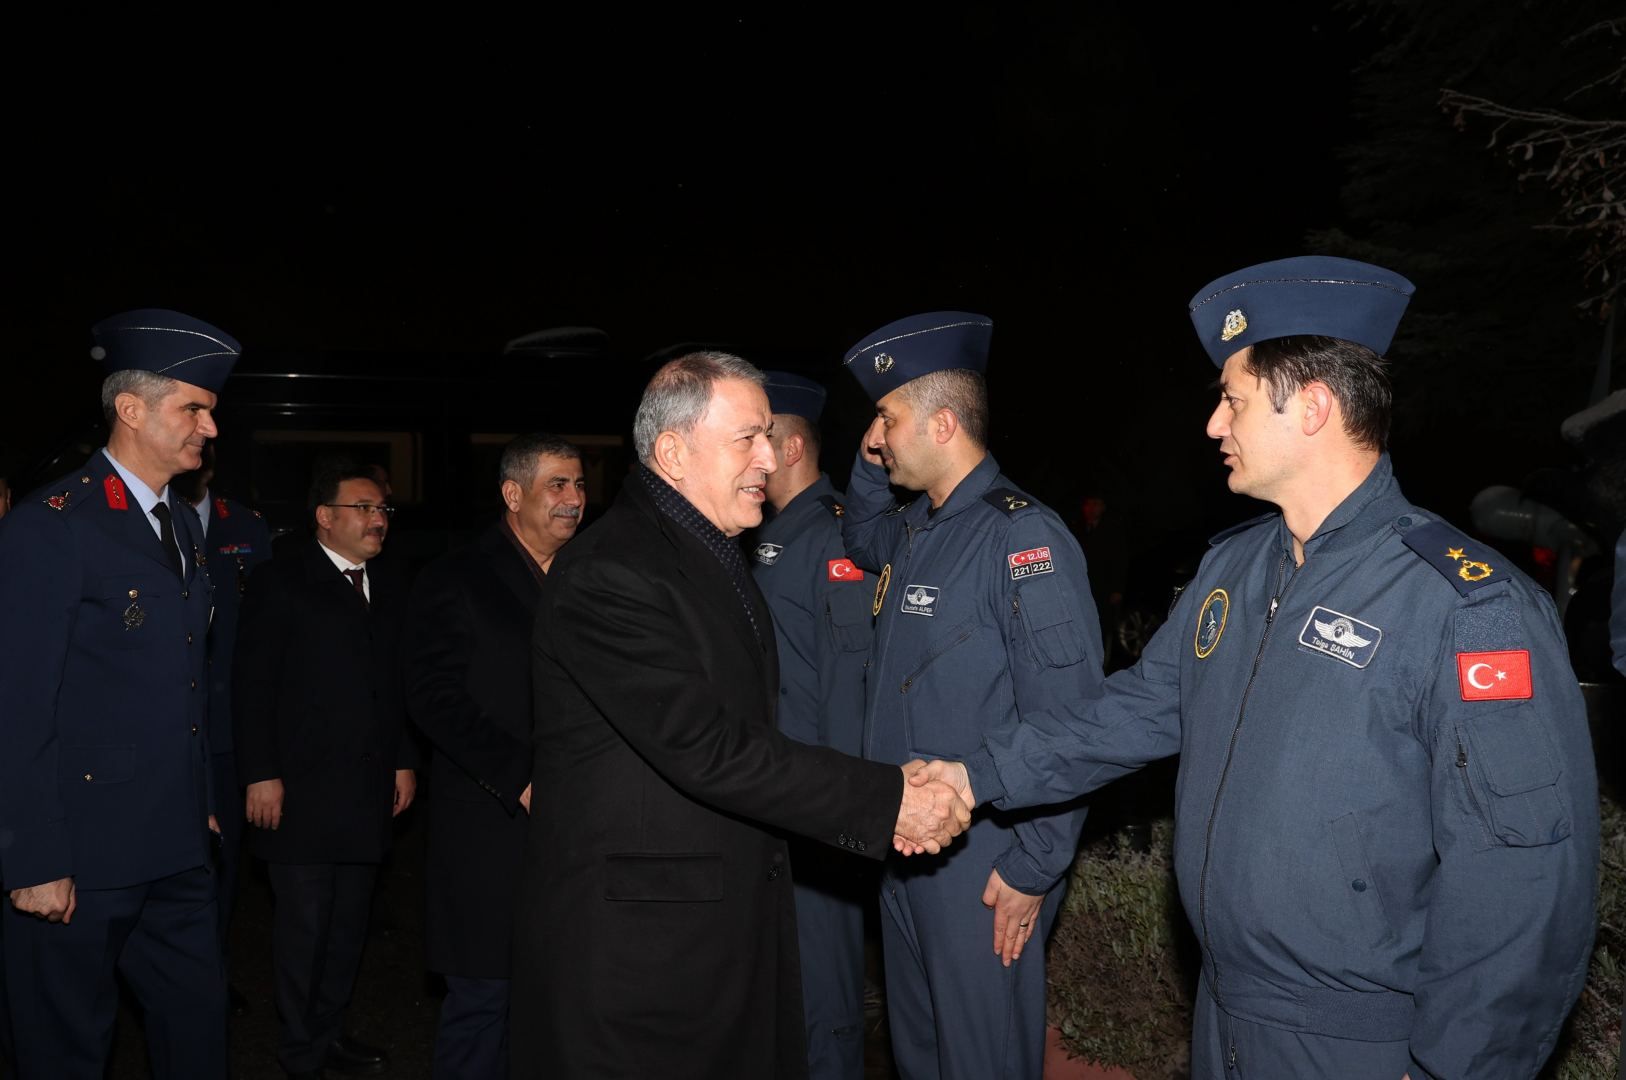 Kayseri hosts trilateral meeting of Azerbaijani, Turkiye, Georgian defense chiefs [PHOTO] - Gallery Image